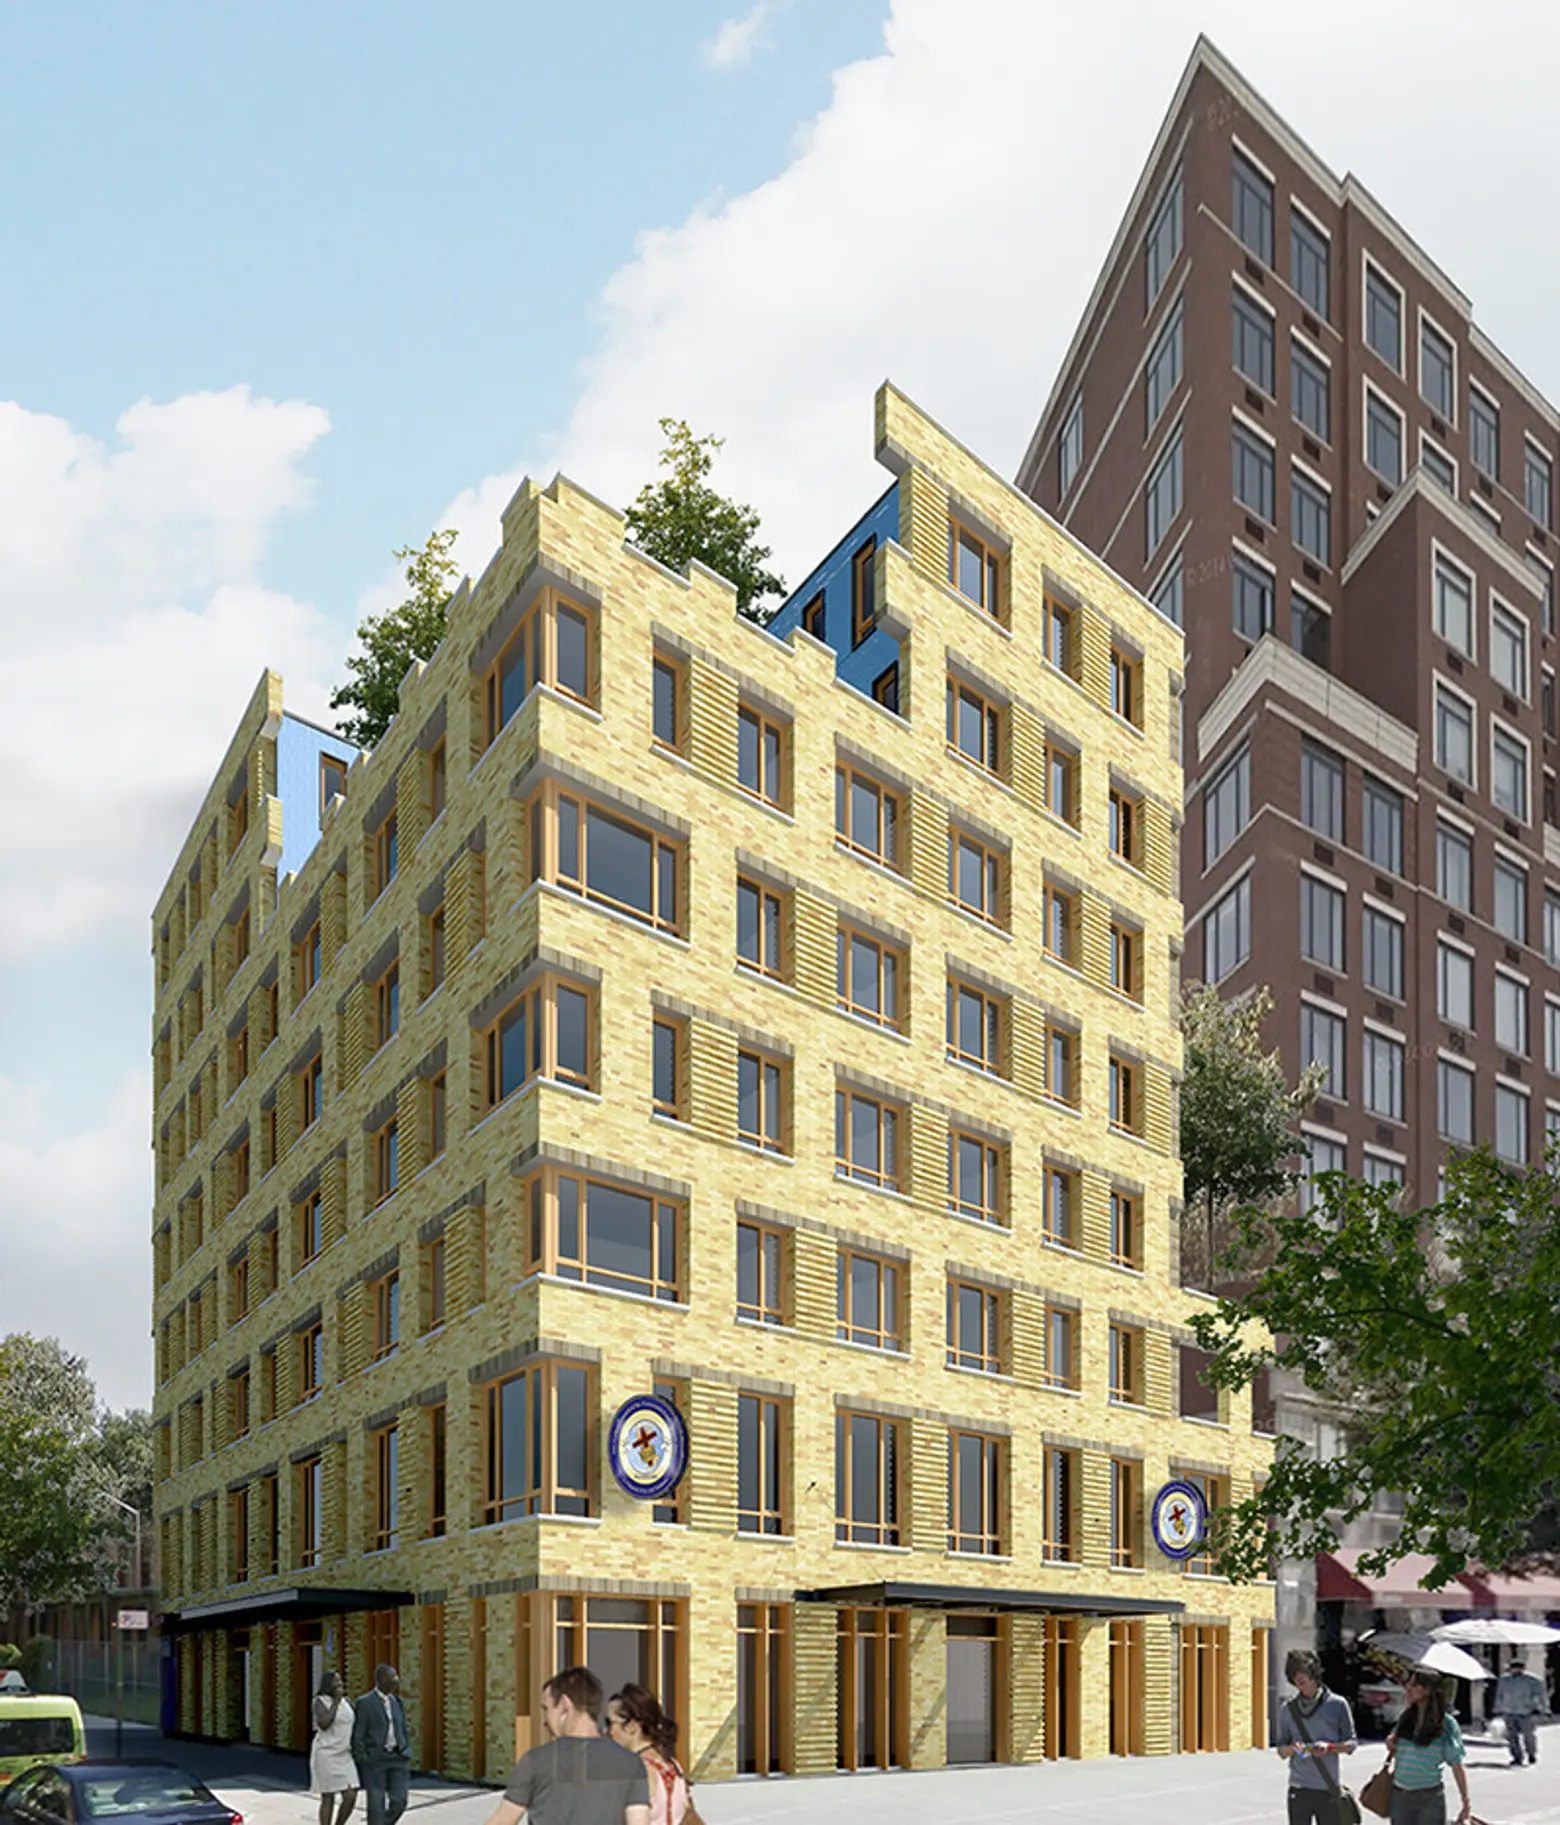 Revealed: Zambrano Architectural Design’s Striking Yellow-Brick Rental in Central Harlem